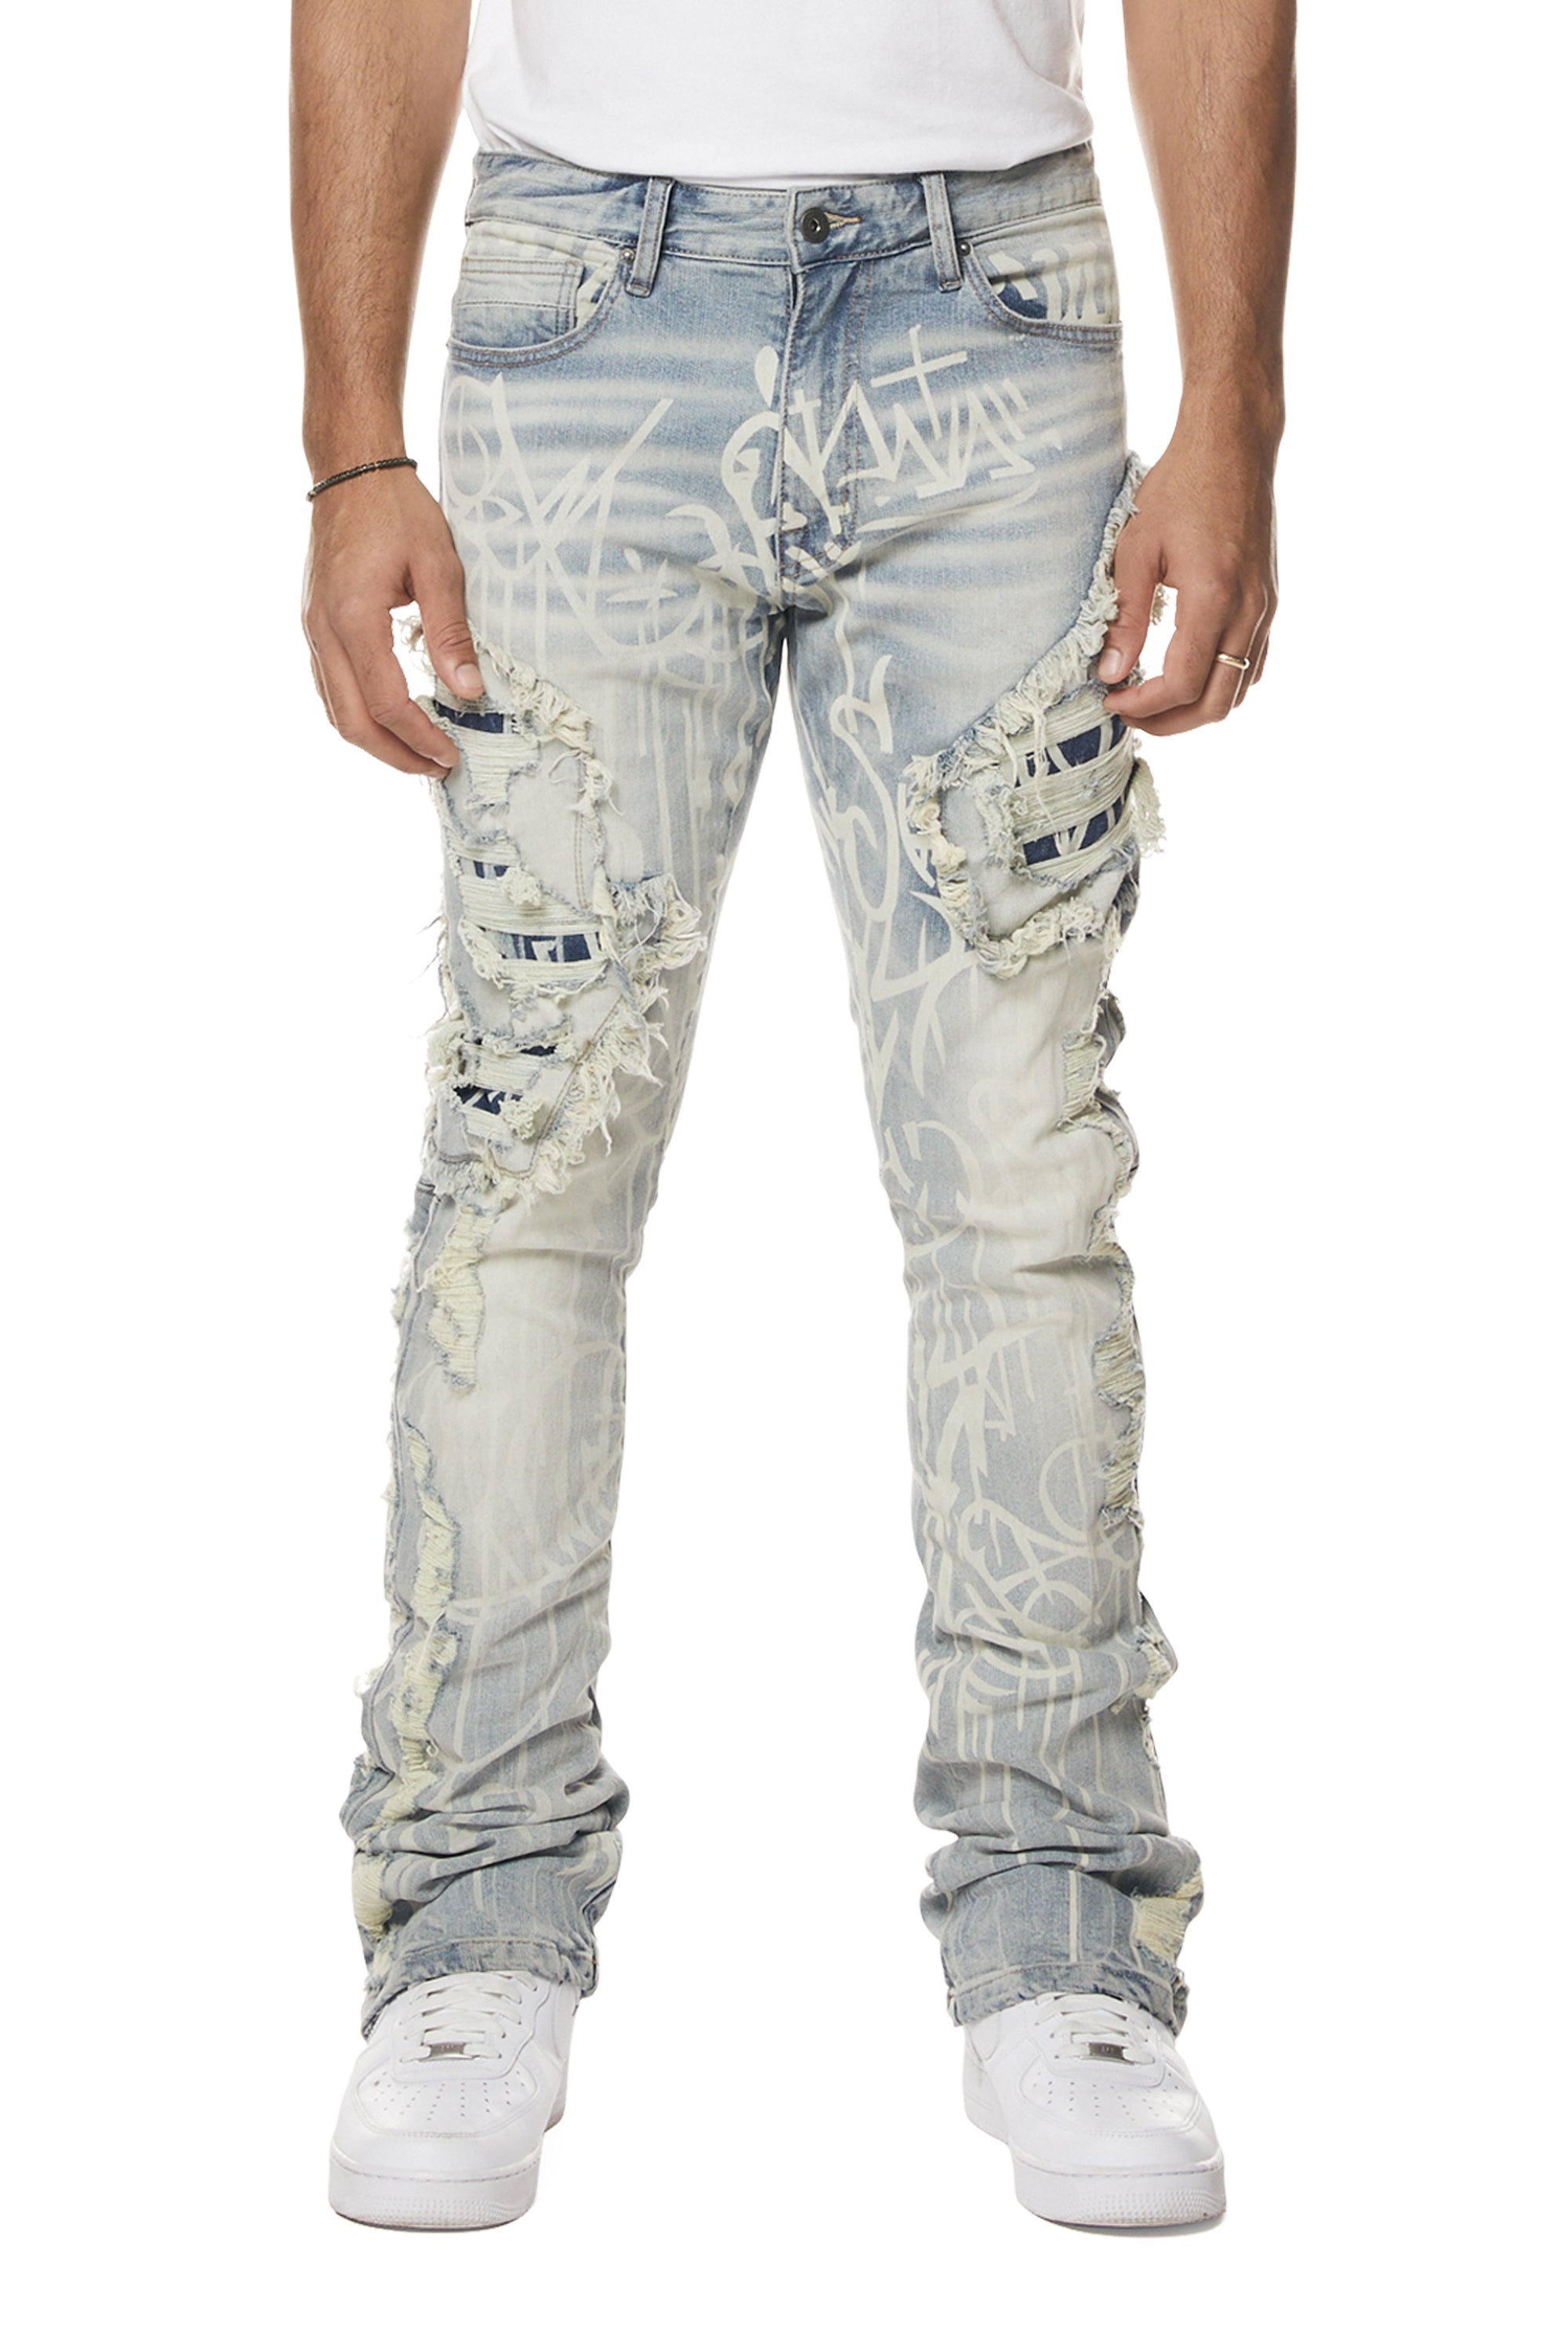 Buy pluss Women's Regular Jeans (LJEW17431-BATAWASH_Blue at Amazon.in